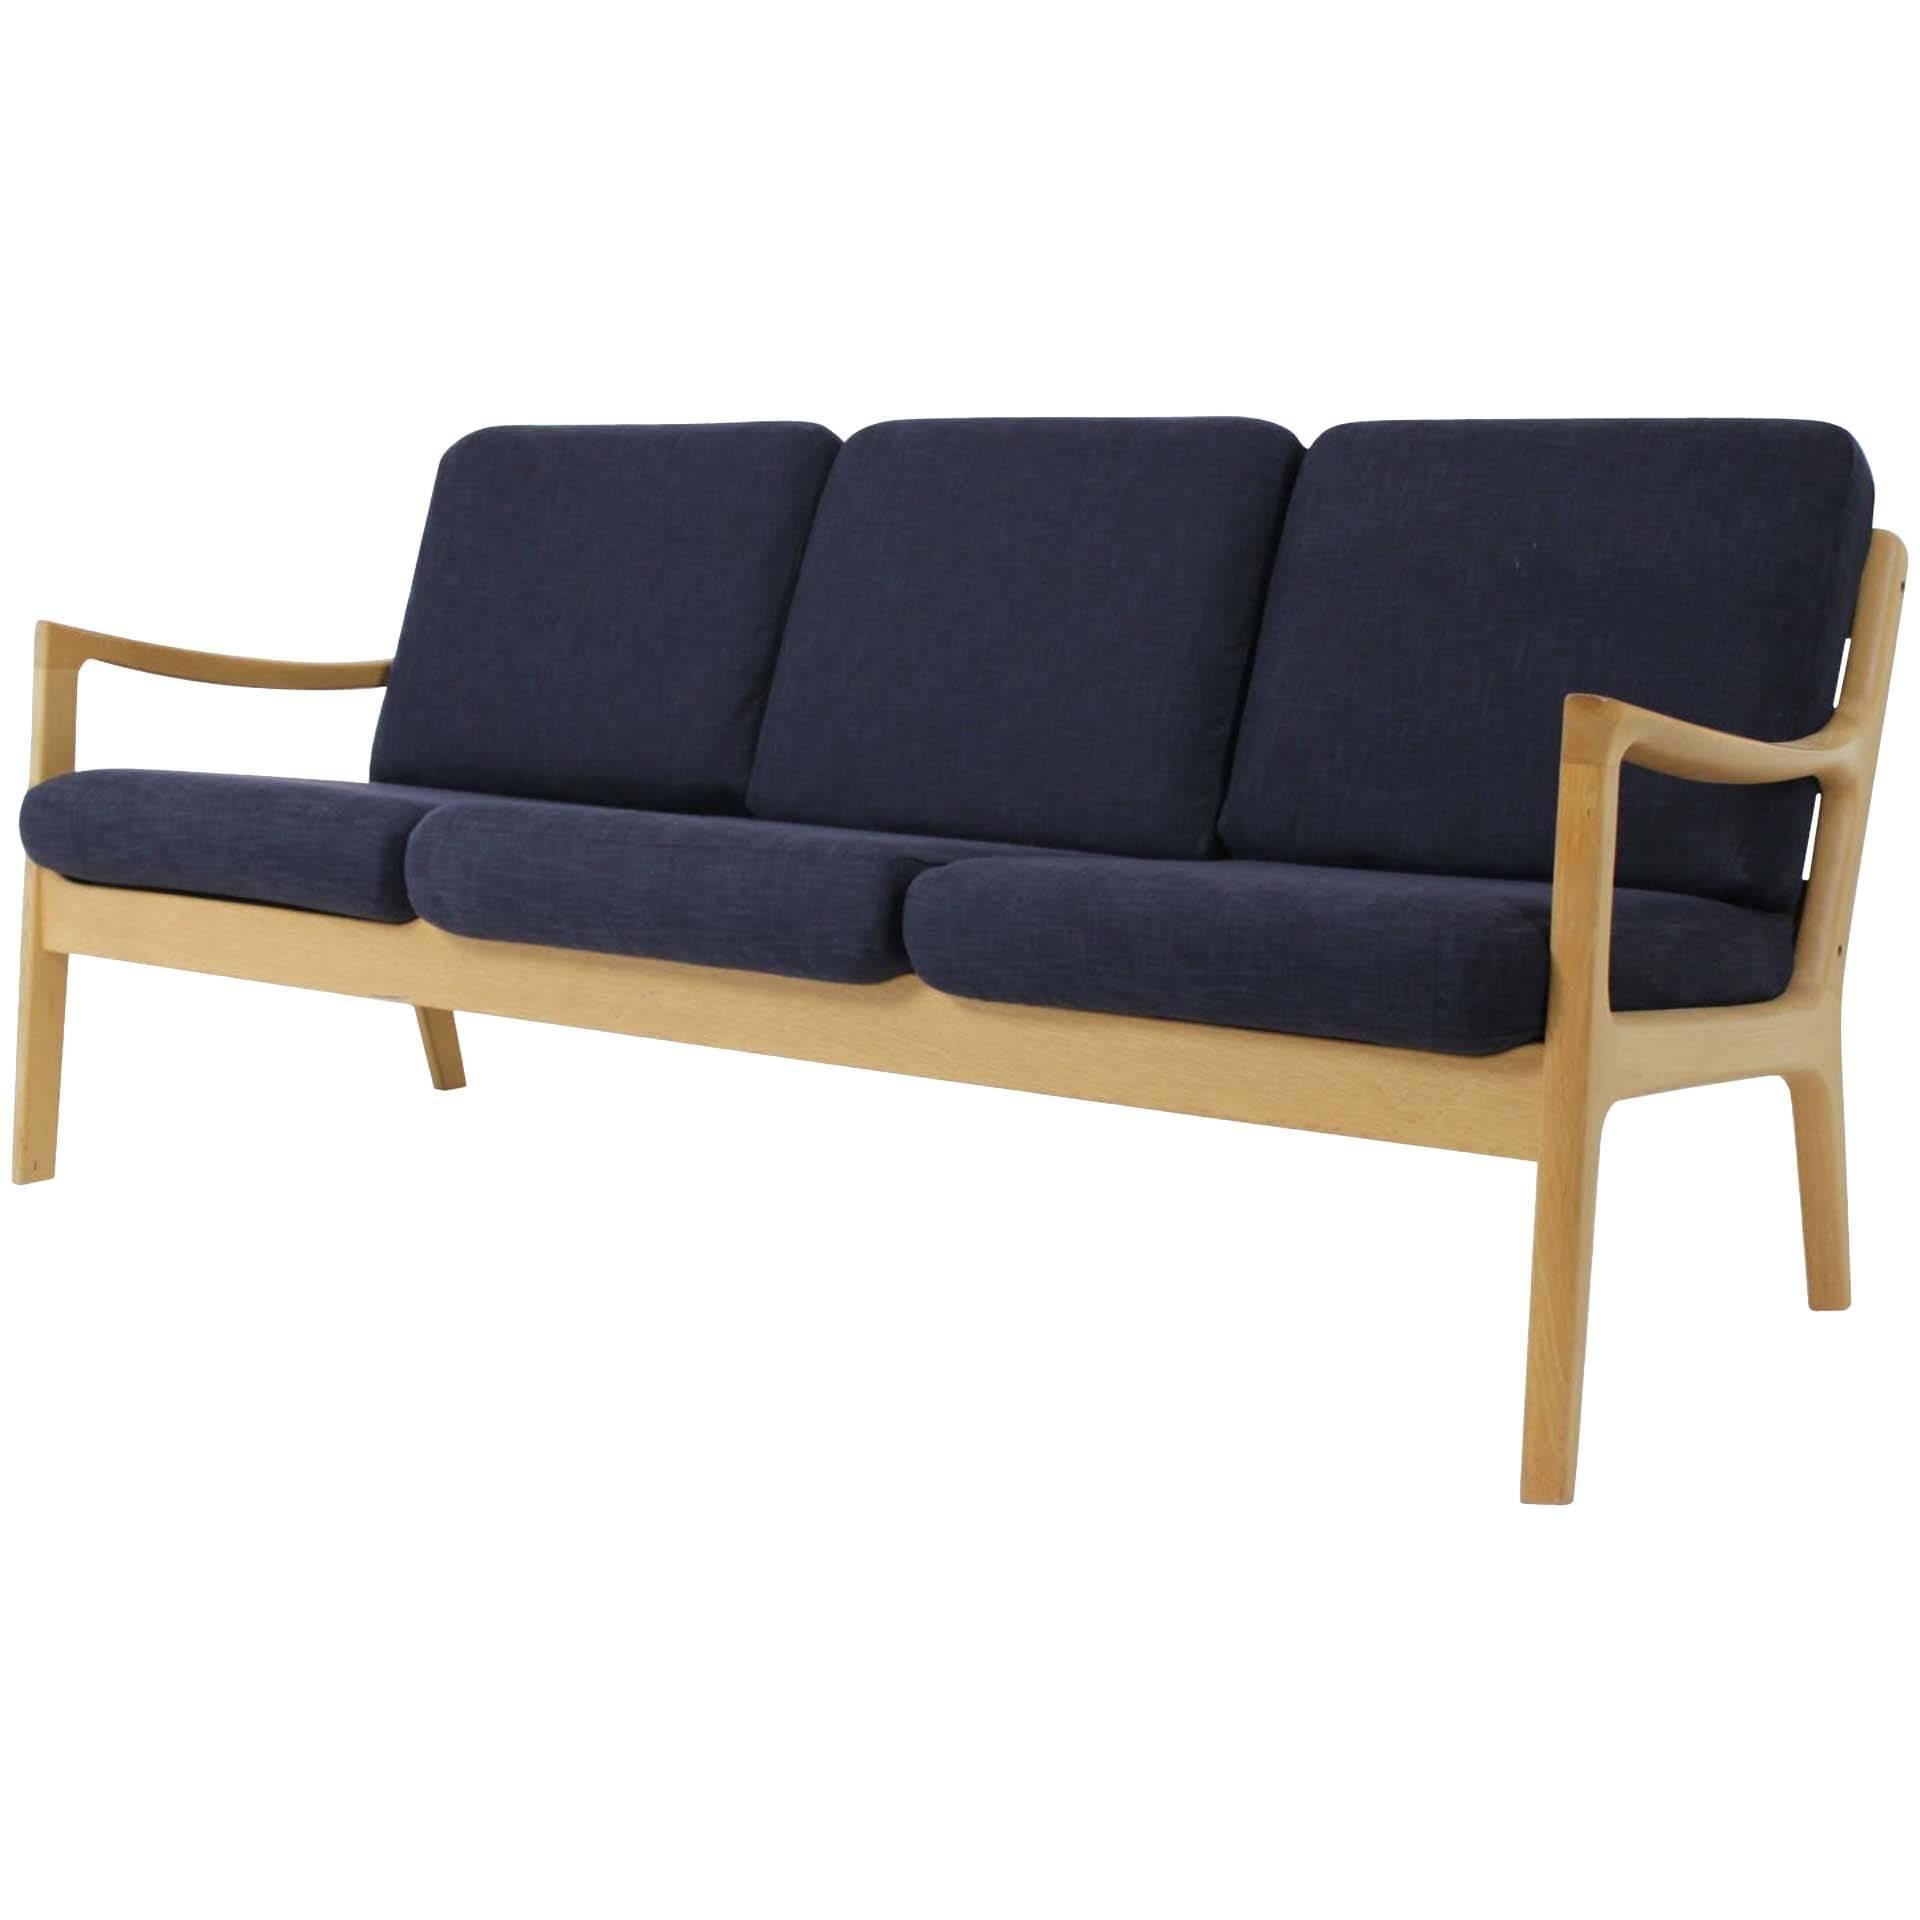 Ole Wanscher Oak "Senator" Sofa by Cado Denmark, Model 166